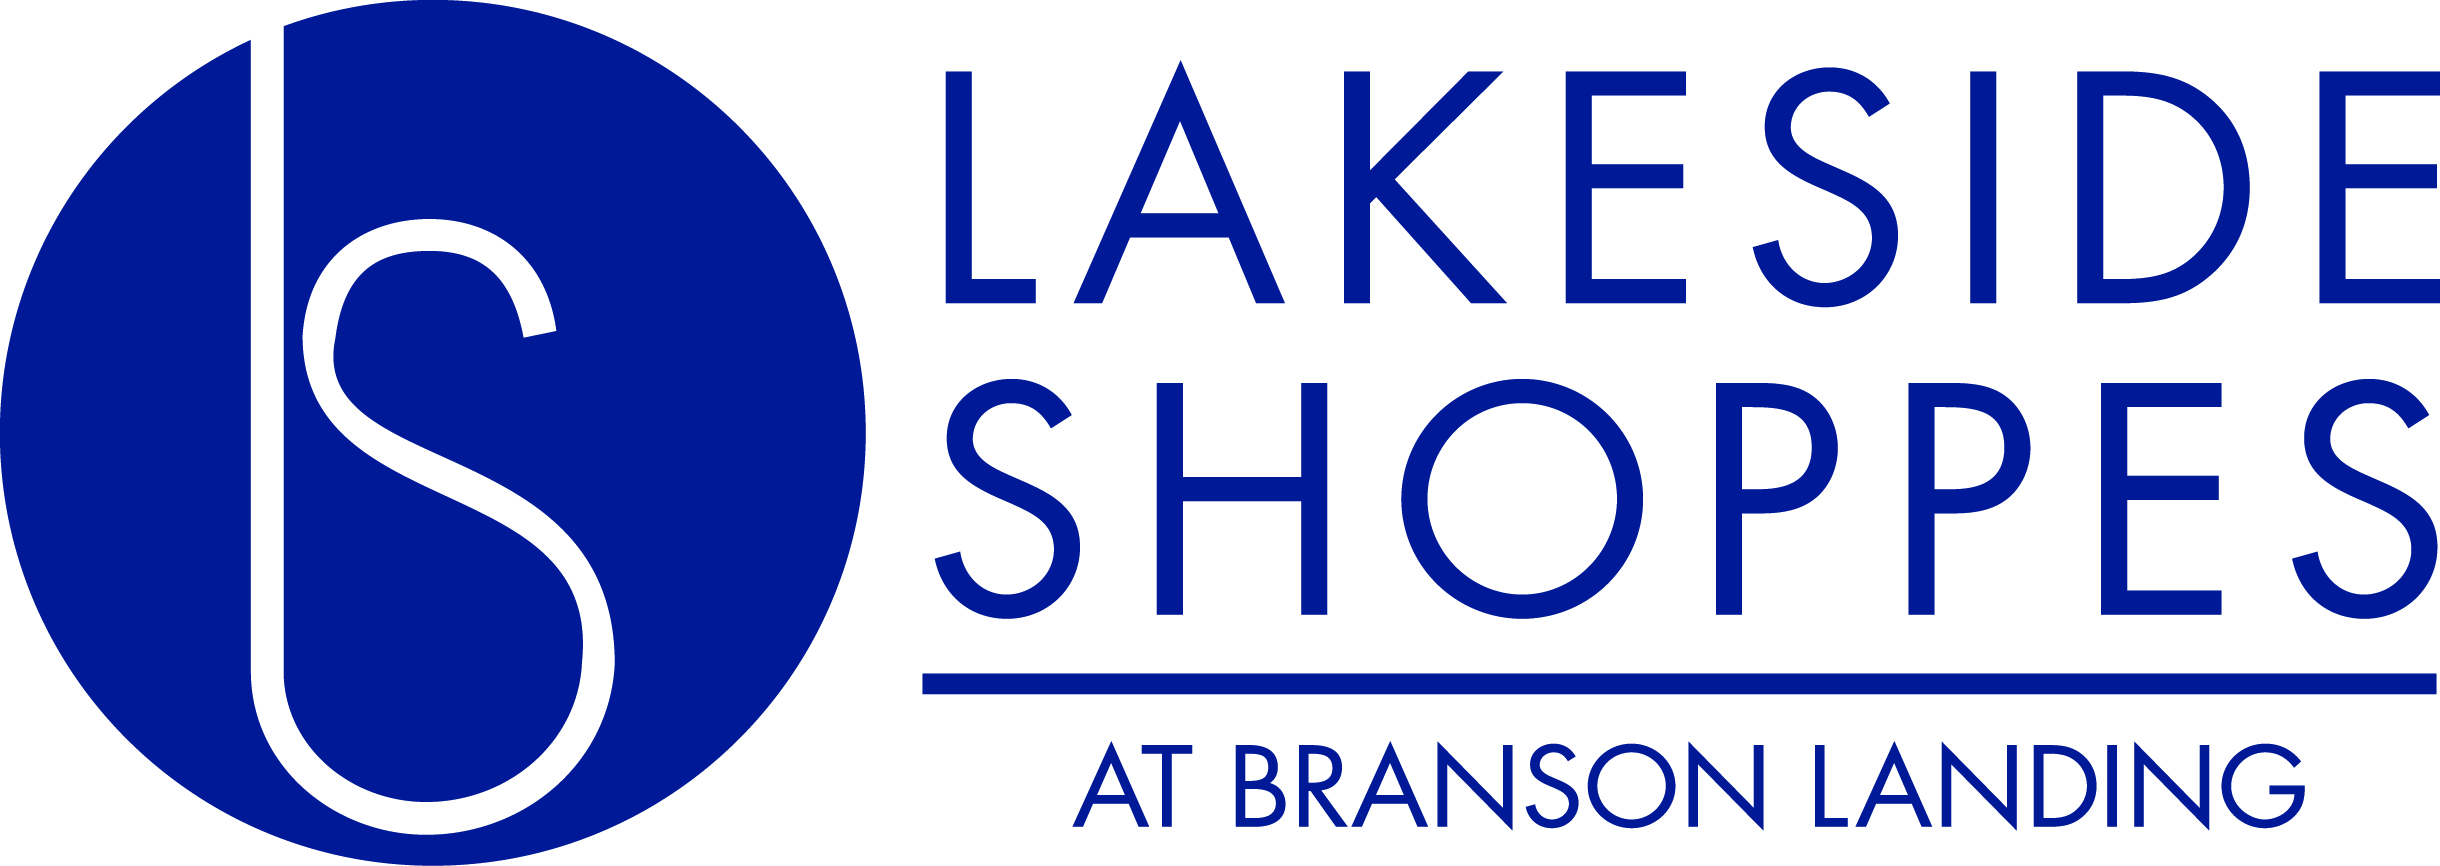 Lakeside Shoppes at Branson Landing Logo